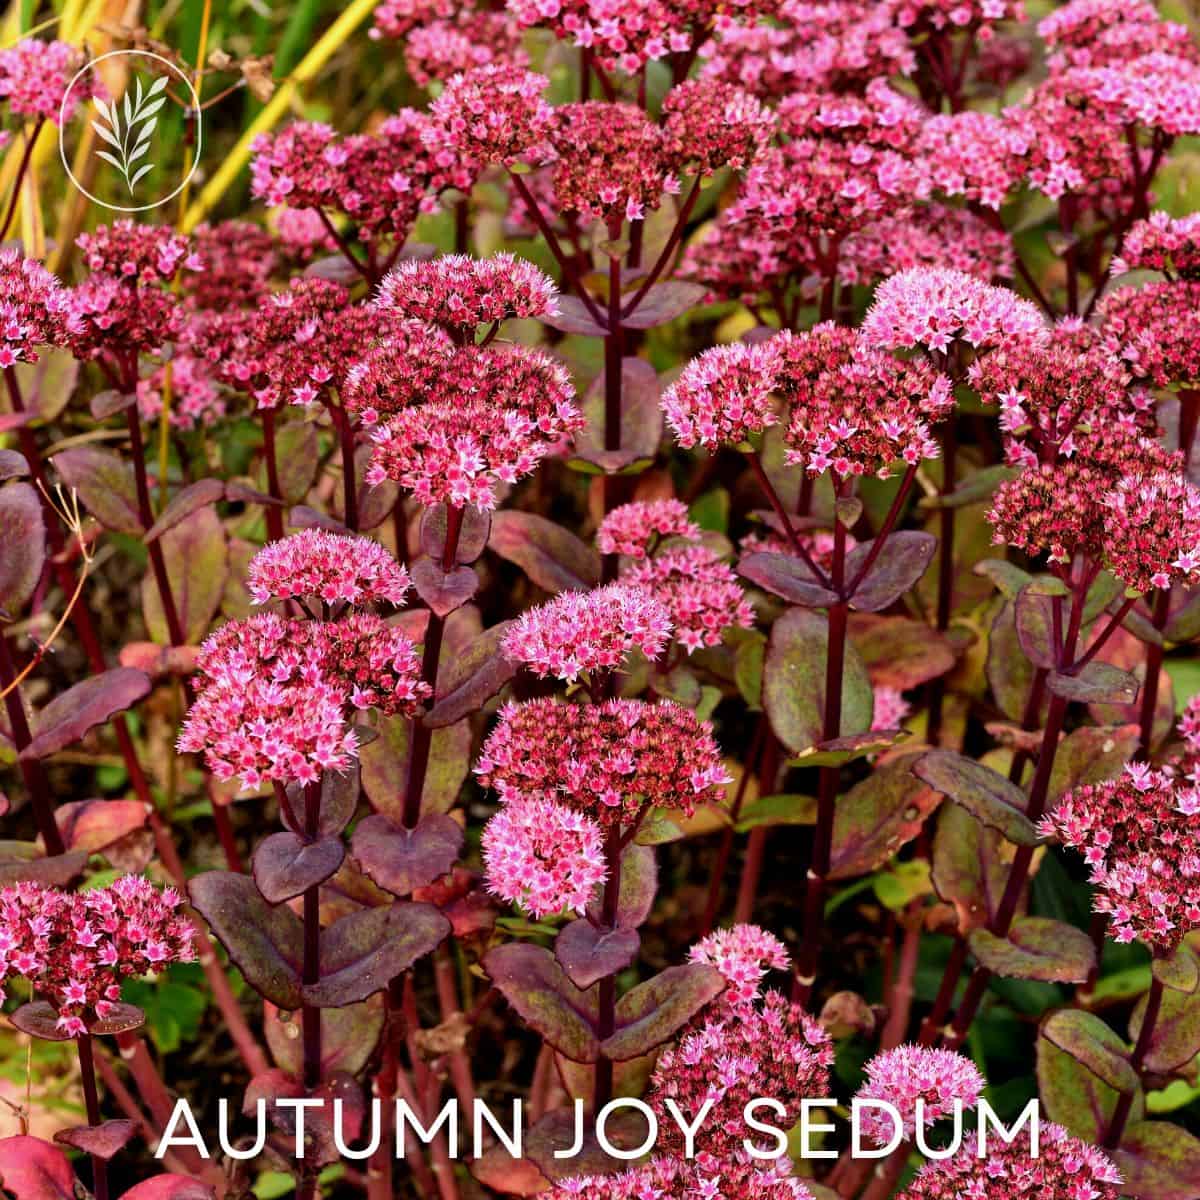 Autumn joy sedum via @home4theharvest